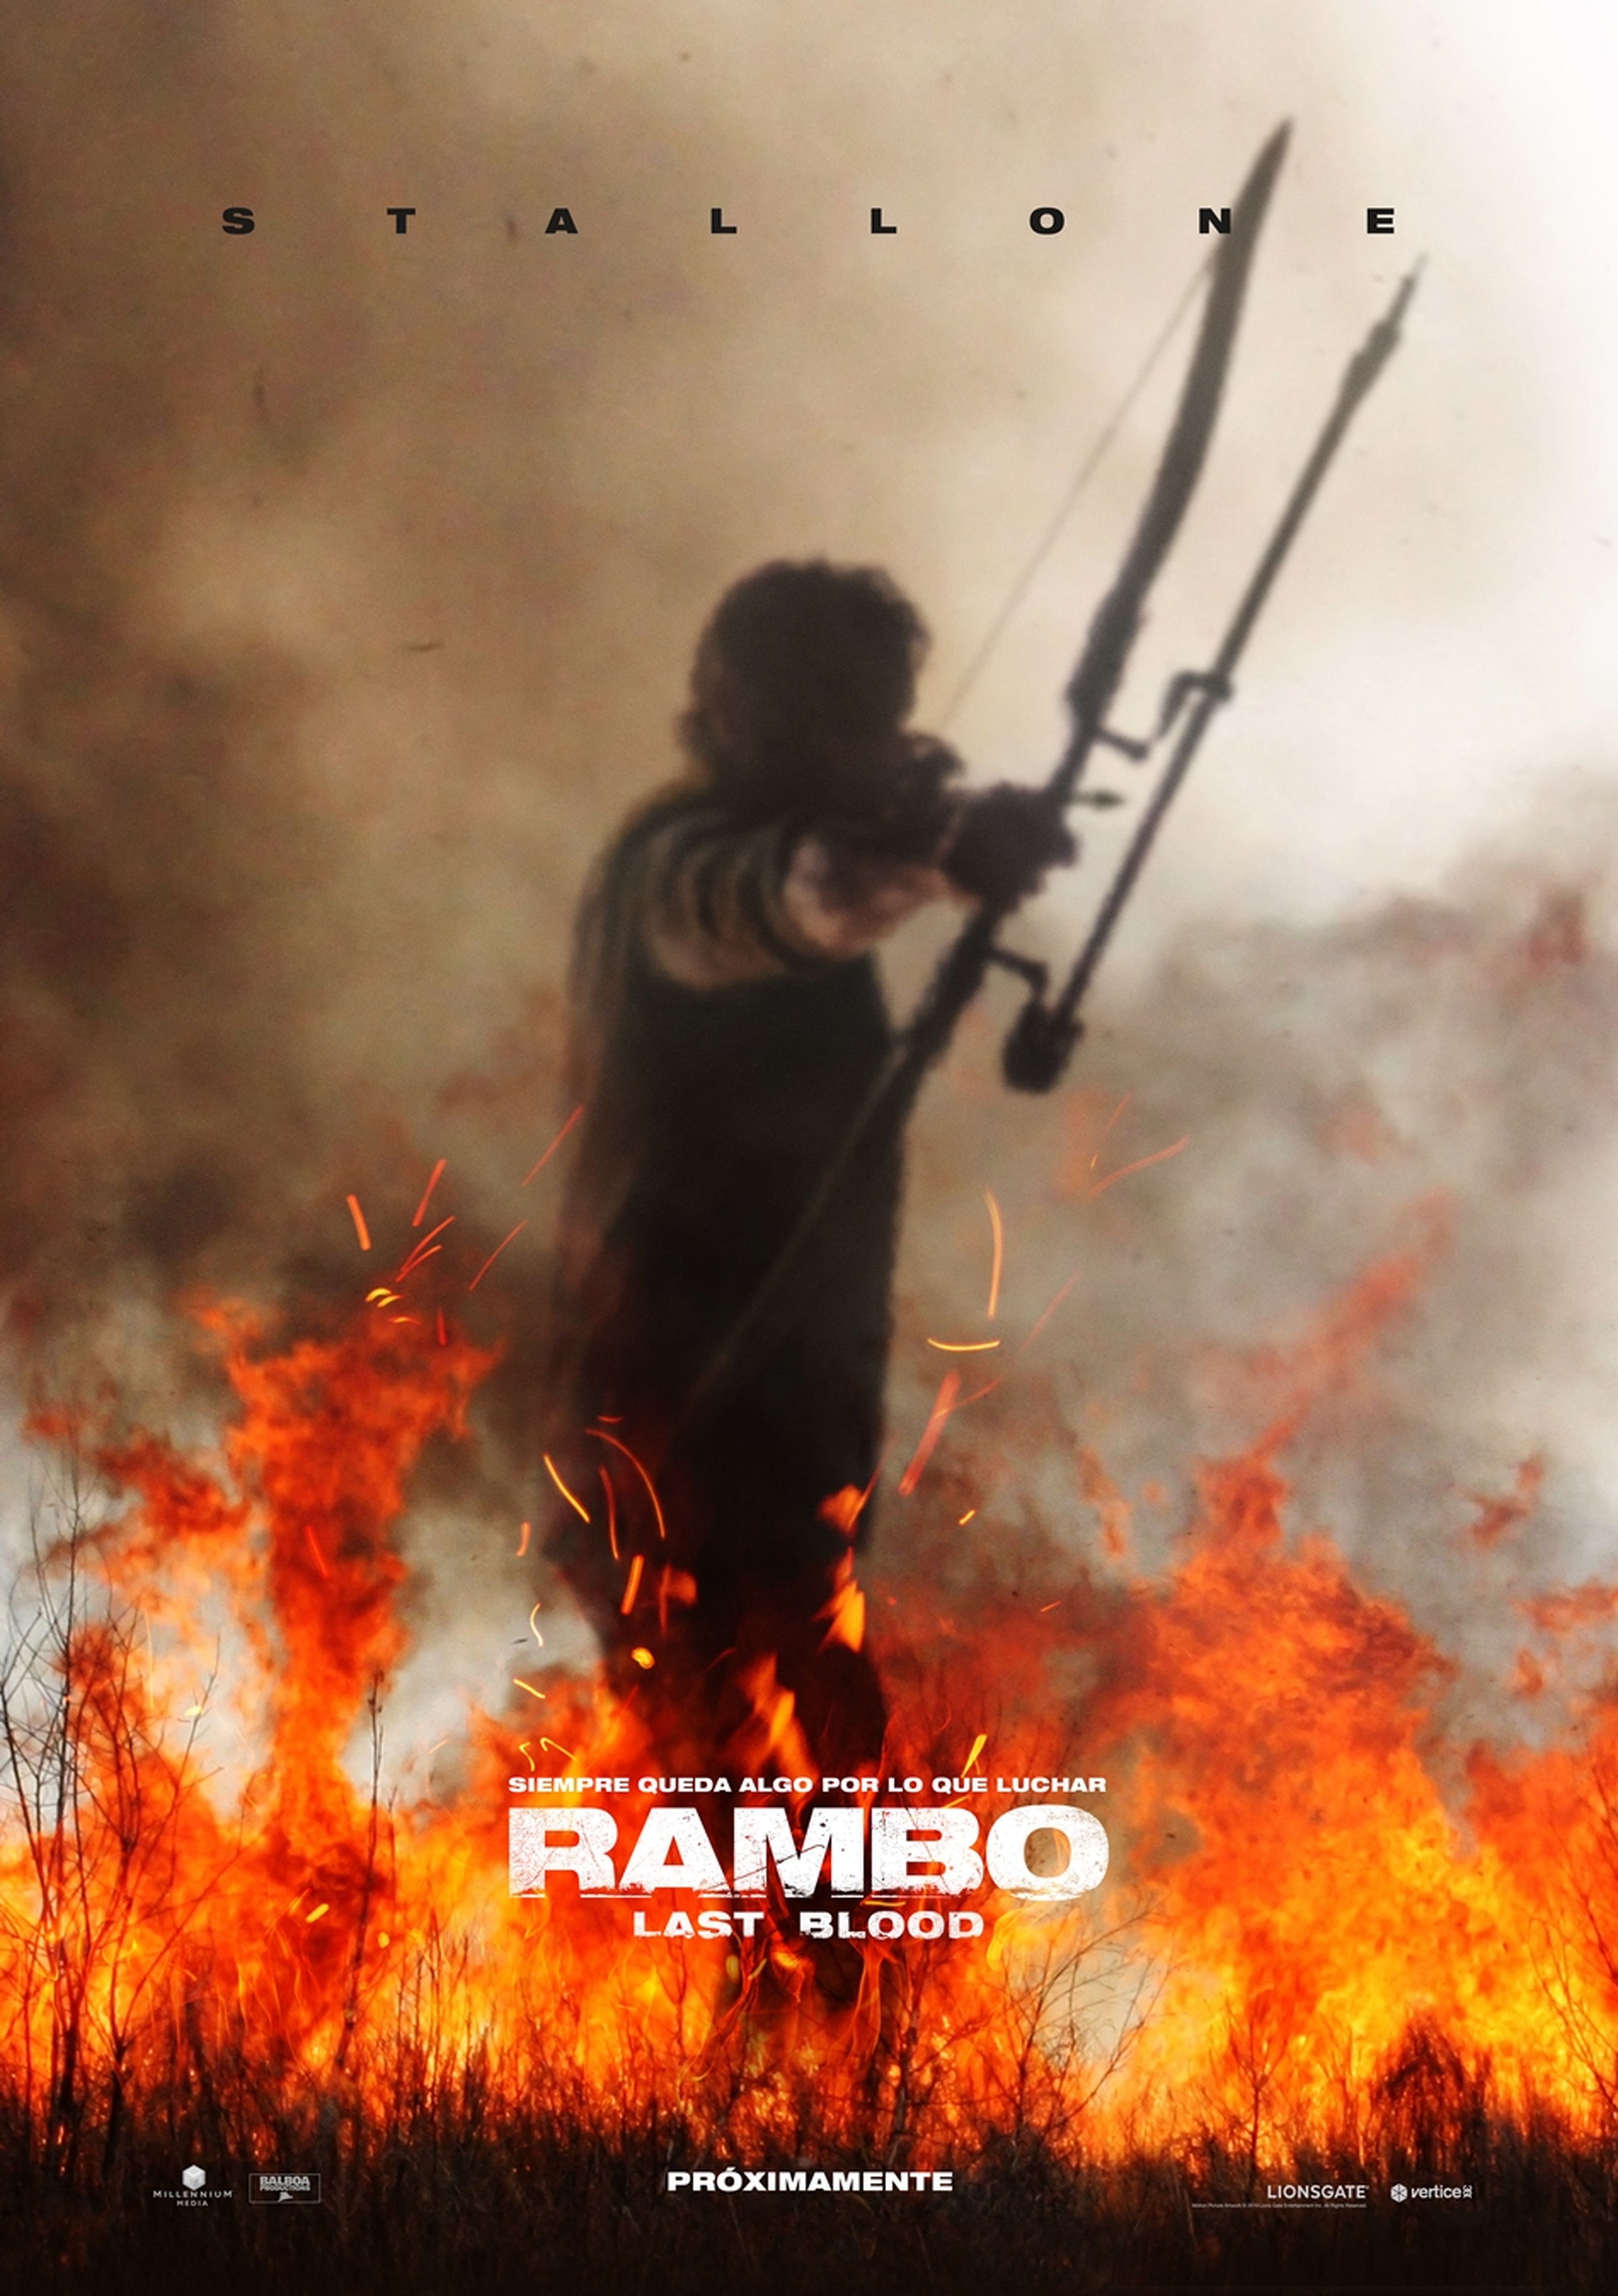 Rambo Last Blood - Póster español de la última entrega de la saga